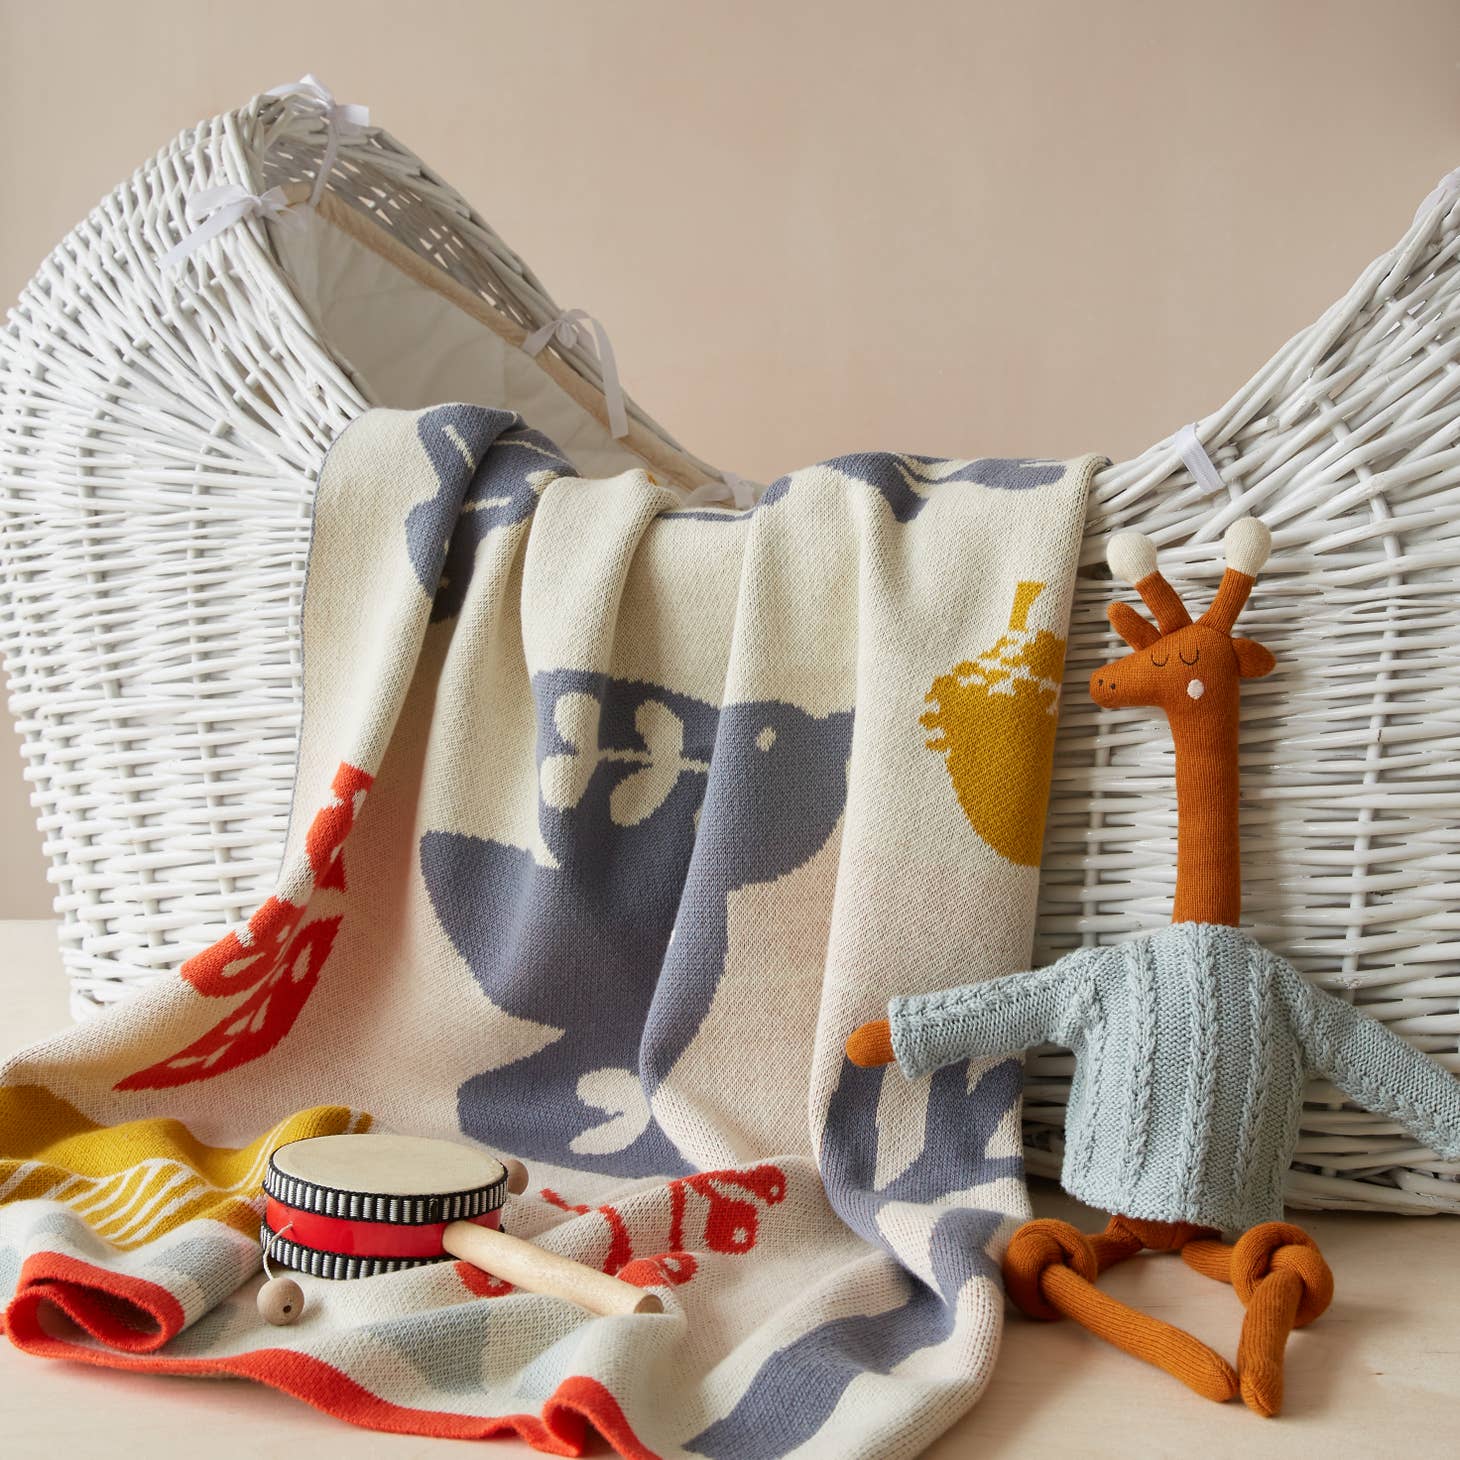 Sophie Home Cotton Knit Stroller Pram Blanket - Folk Multi